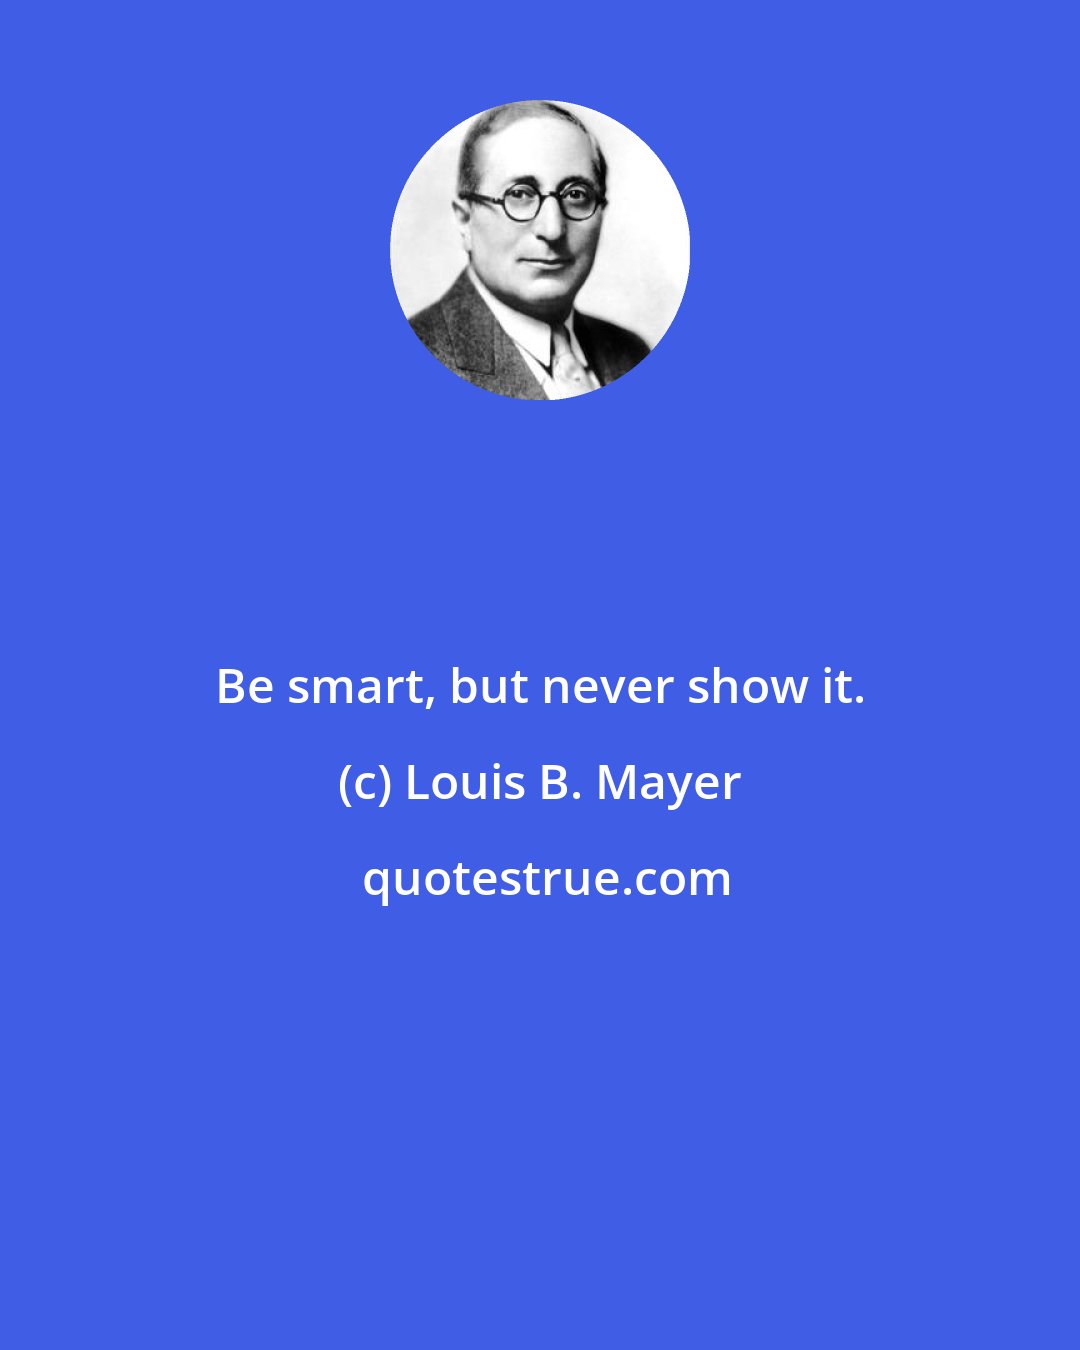 Louis B. Mayer: Be smart, but never show it.